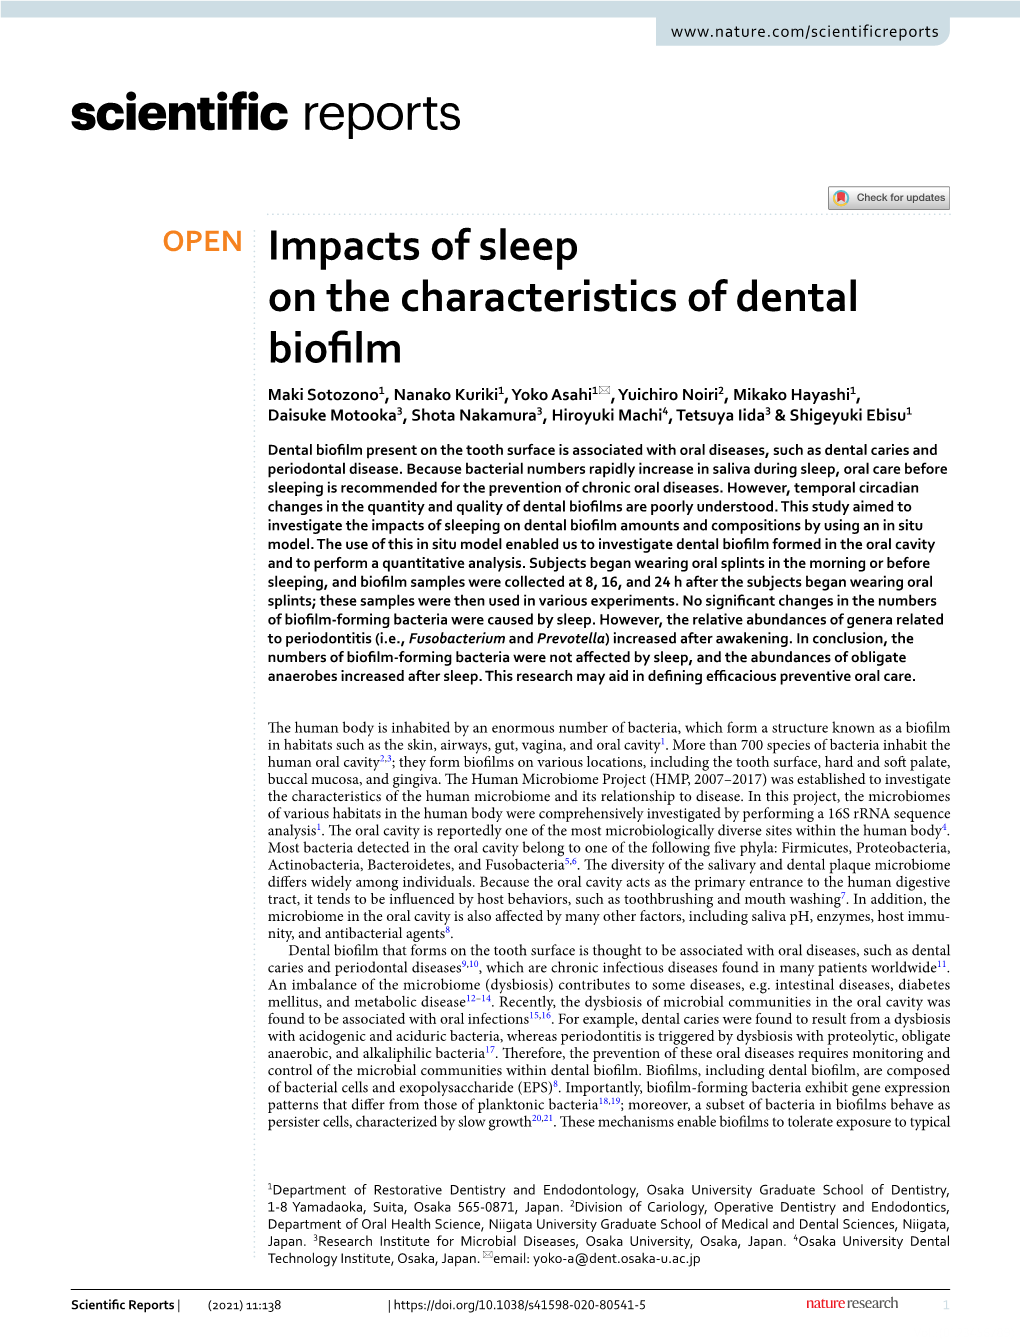 Impacts of Sleep on the Characteristics of Dental Biofilm